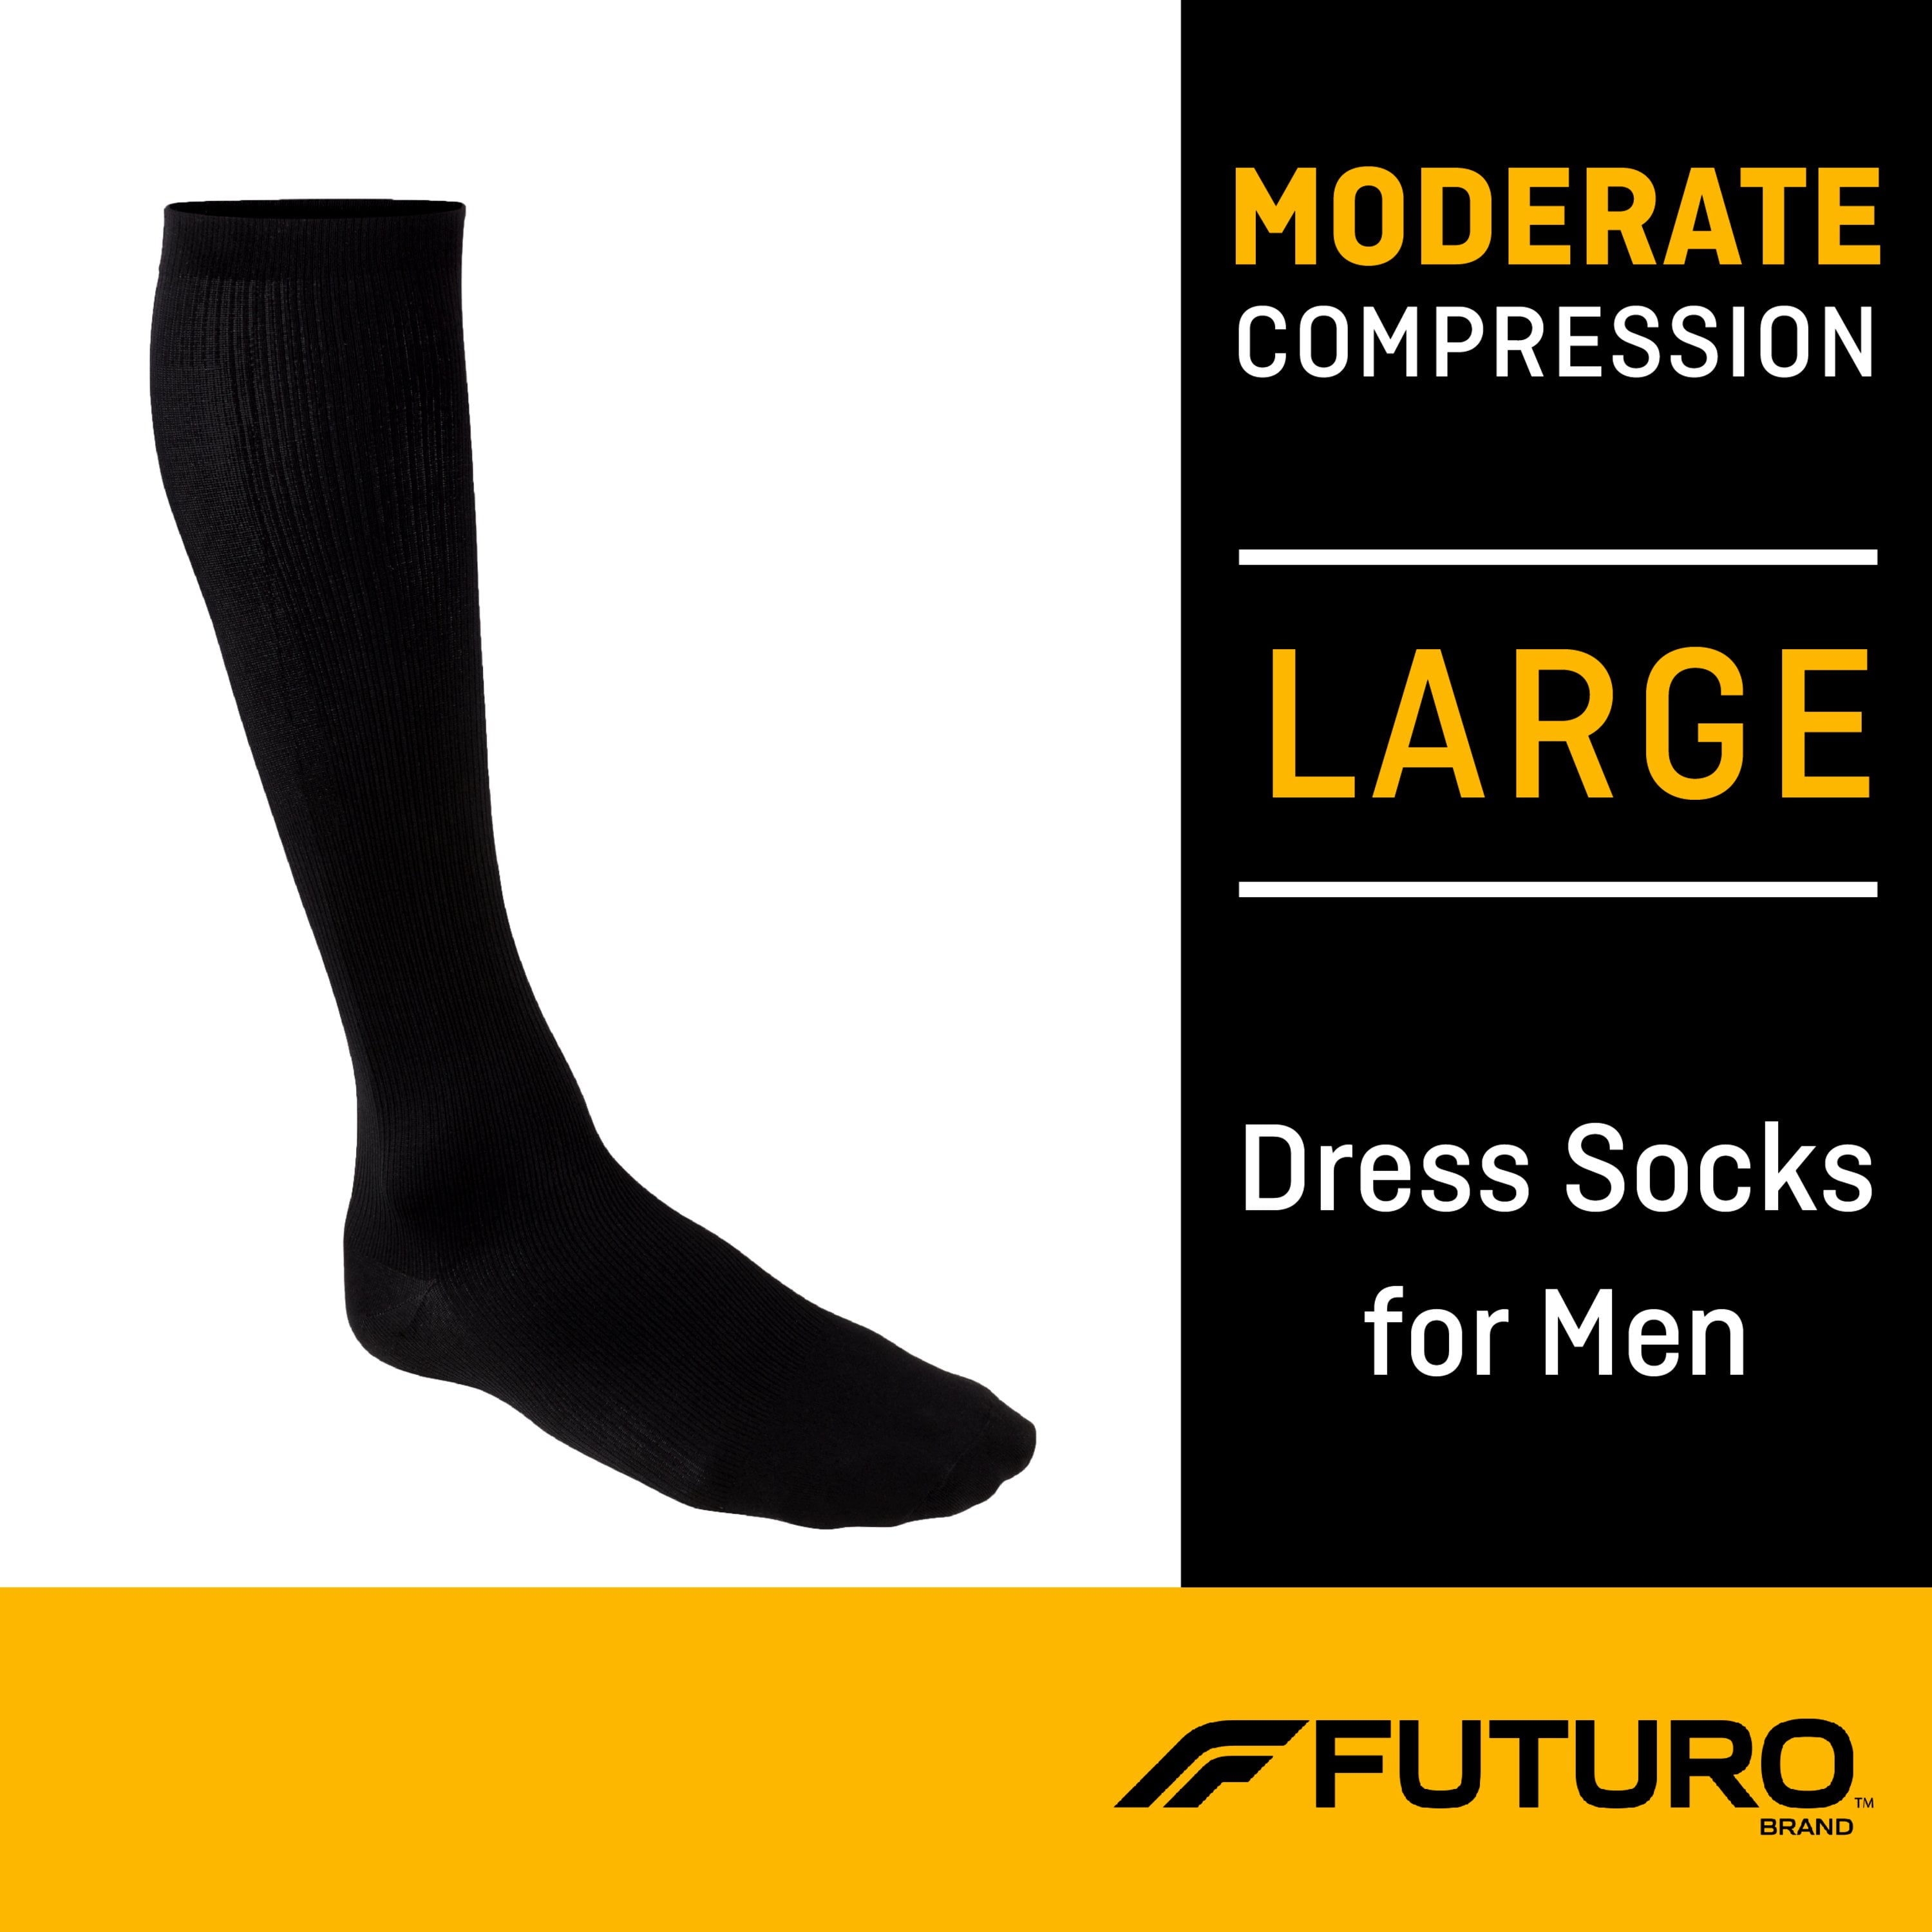 FUTURO Dress Socks, Large, Moderate Compression, Black, Male